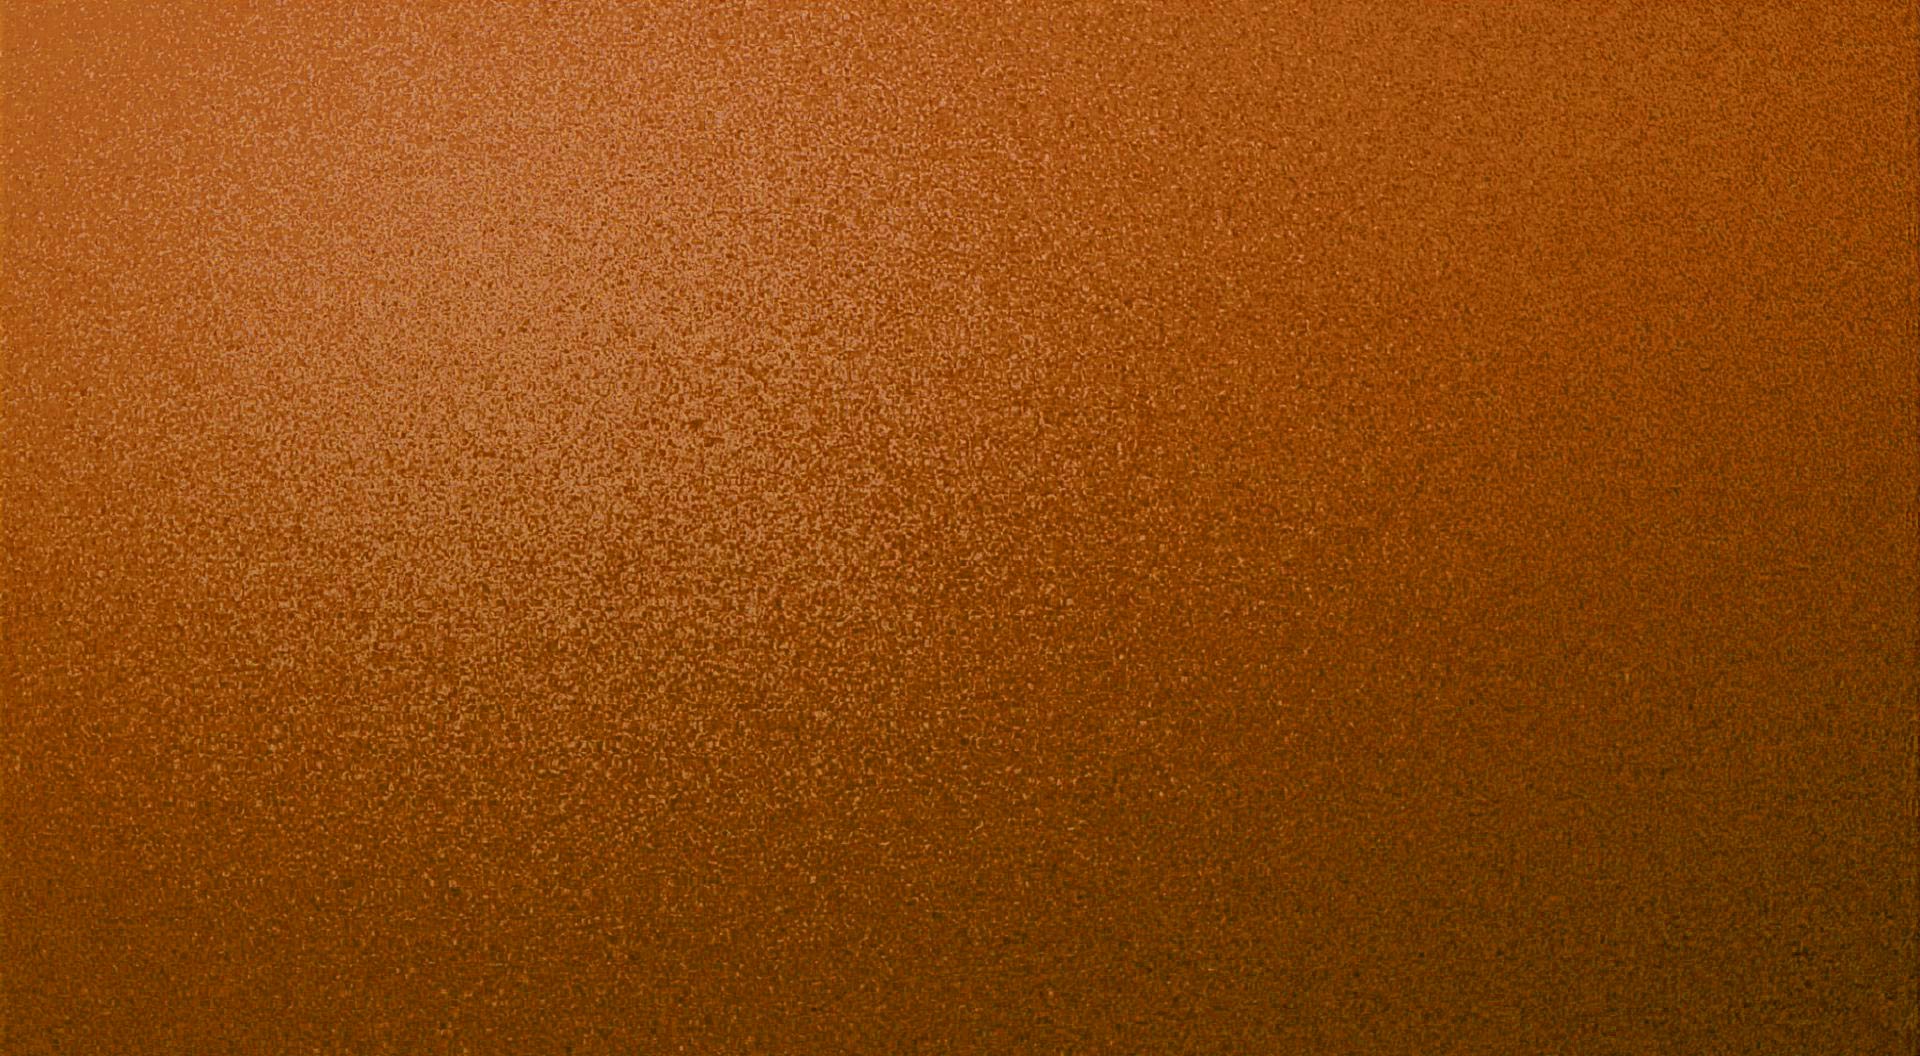 Orange textured speckled desktop background wallpaper for use with Mac